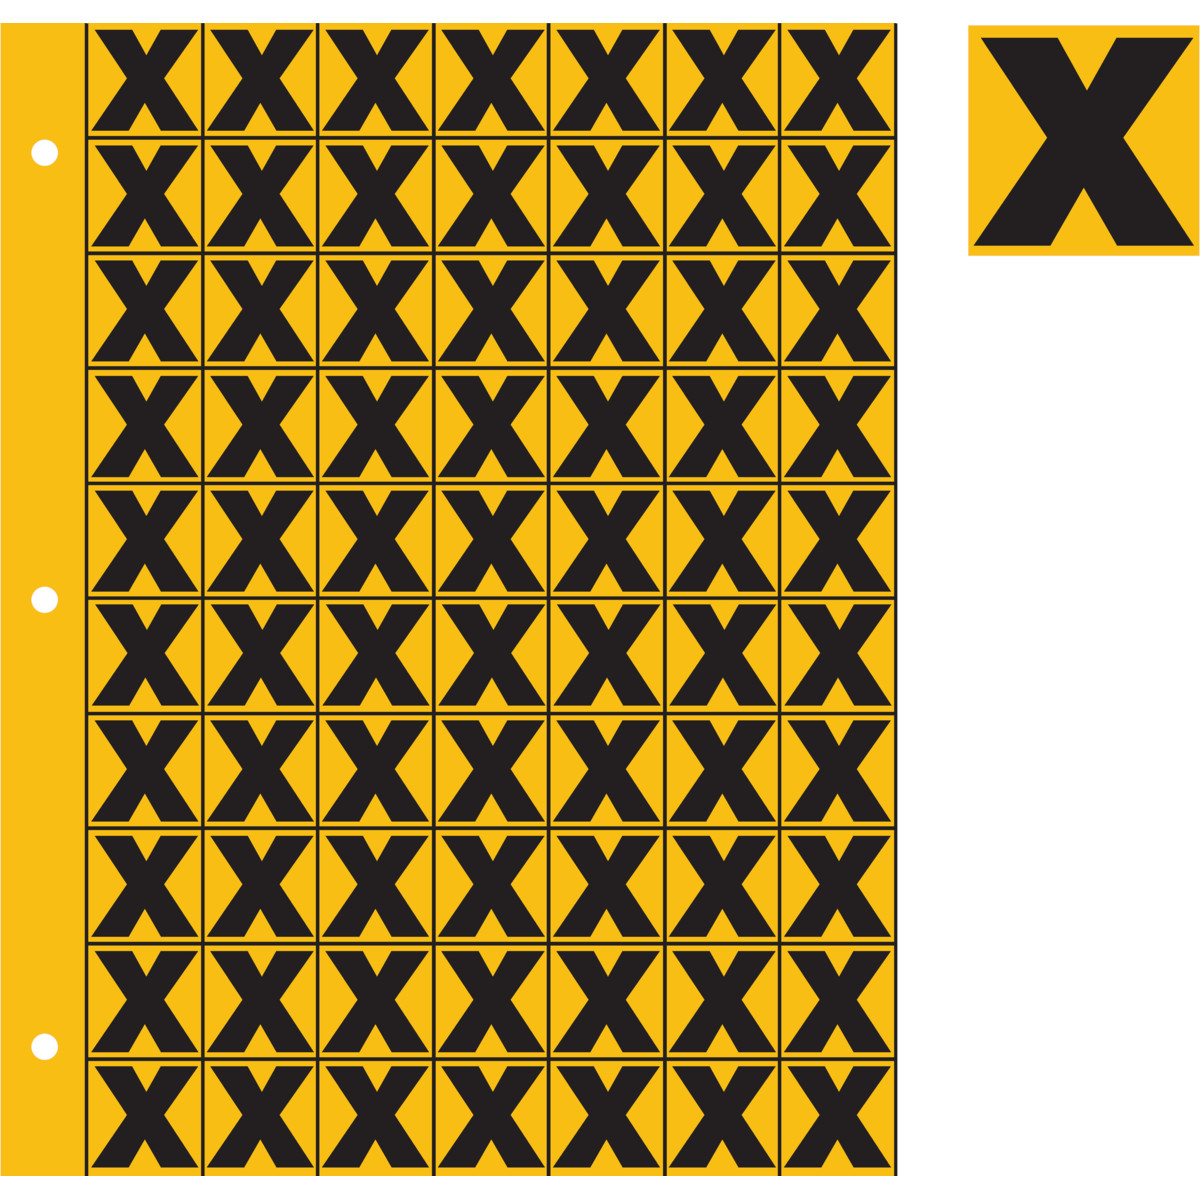 1" Black on Yellow Engineer Grade Reflective "X"